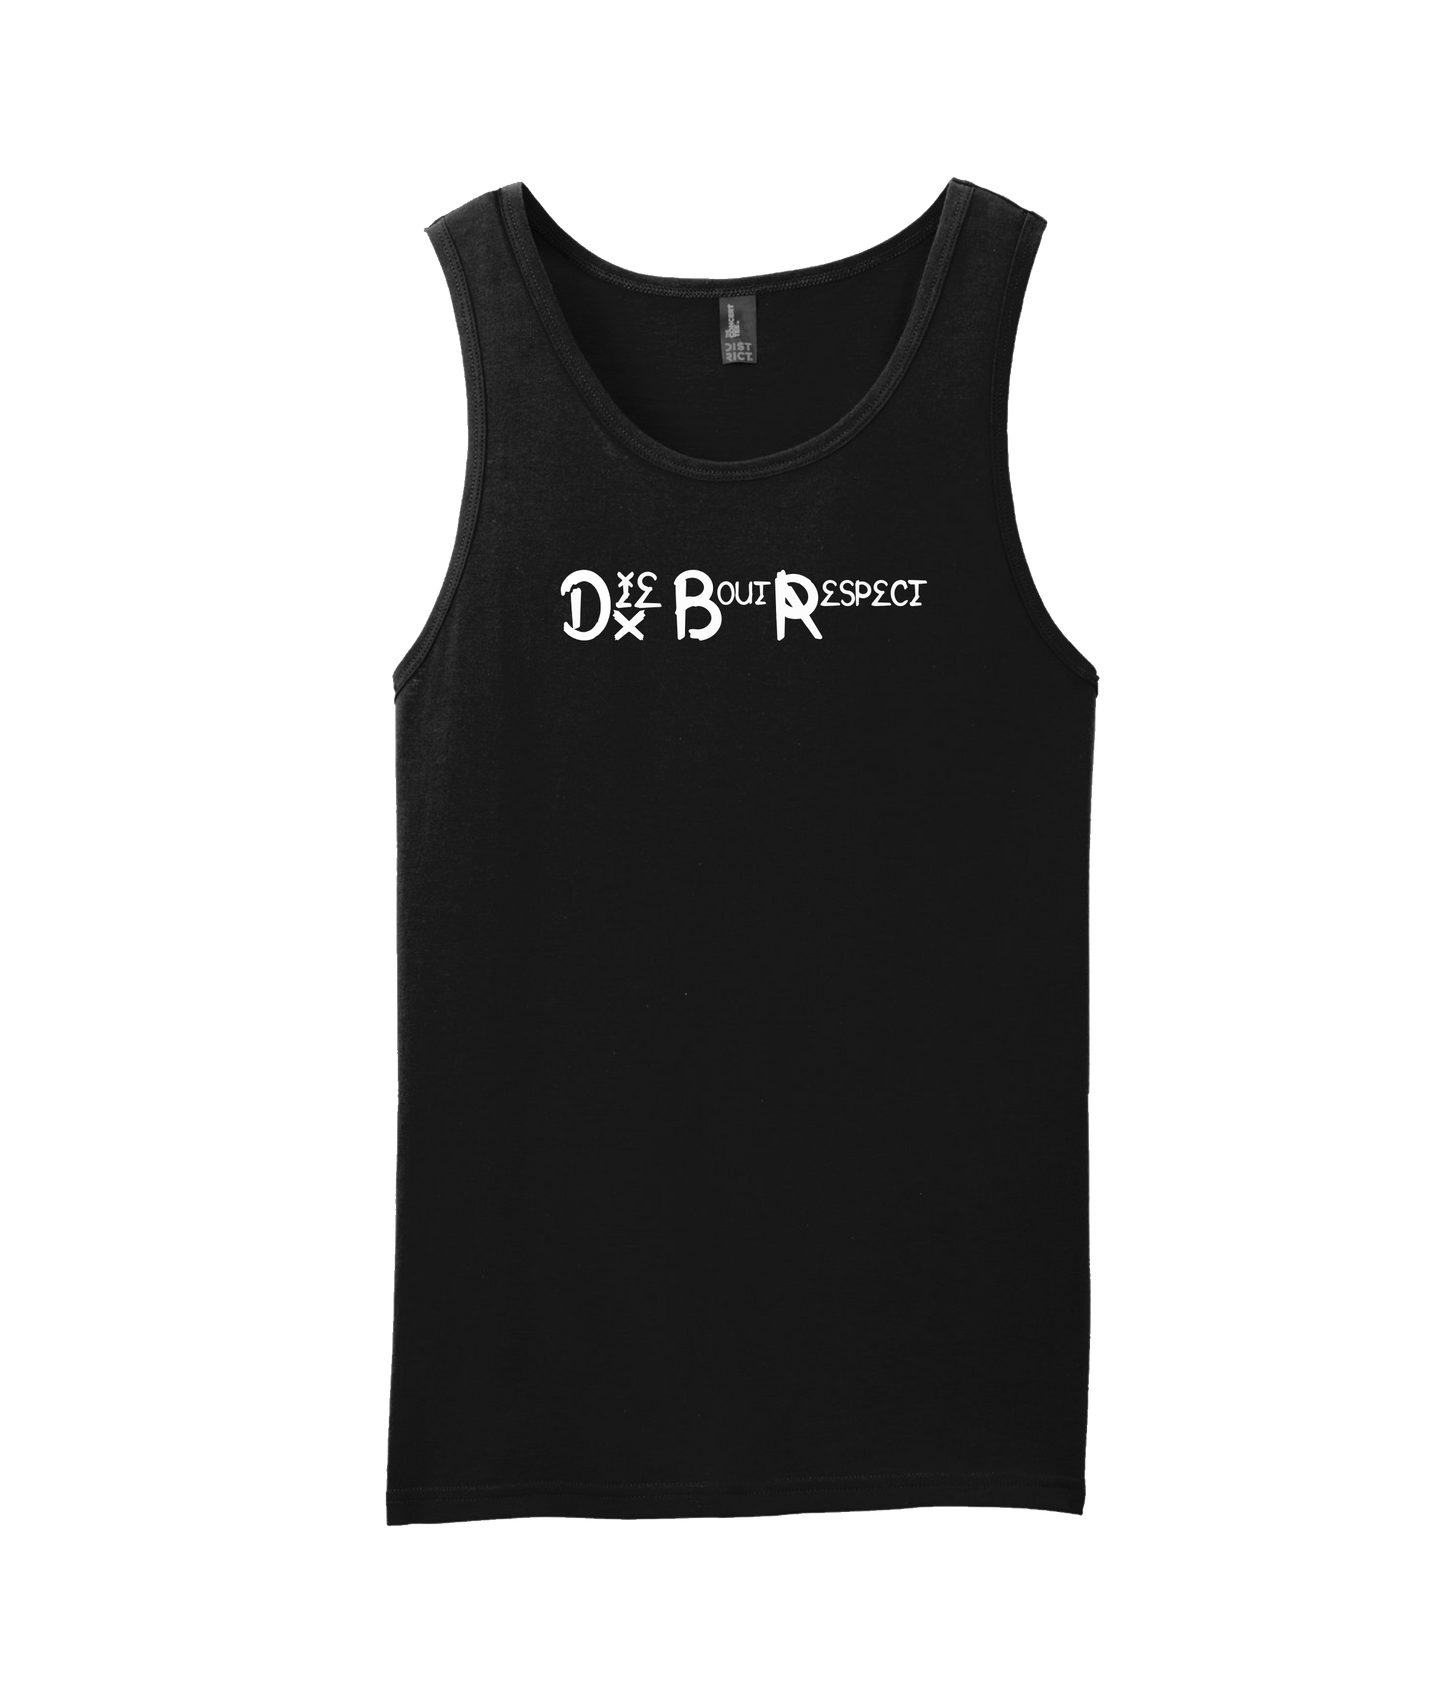 DBR - Die Bout Respect - Black Tank Top